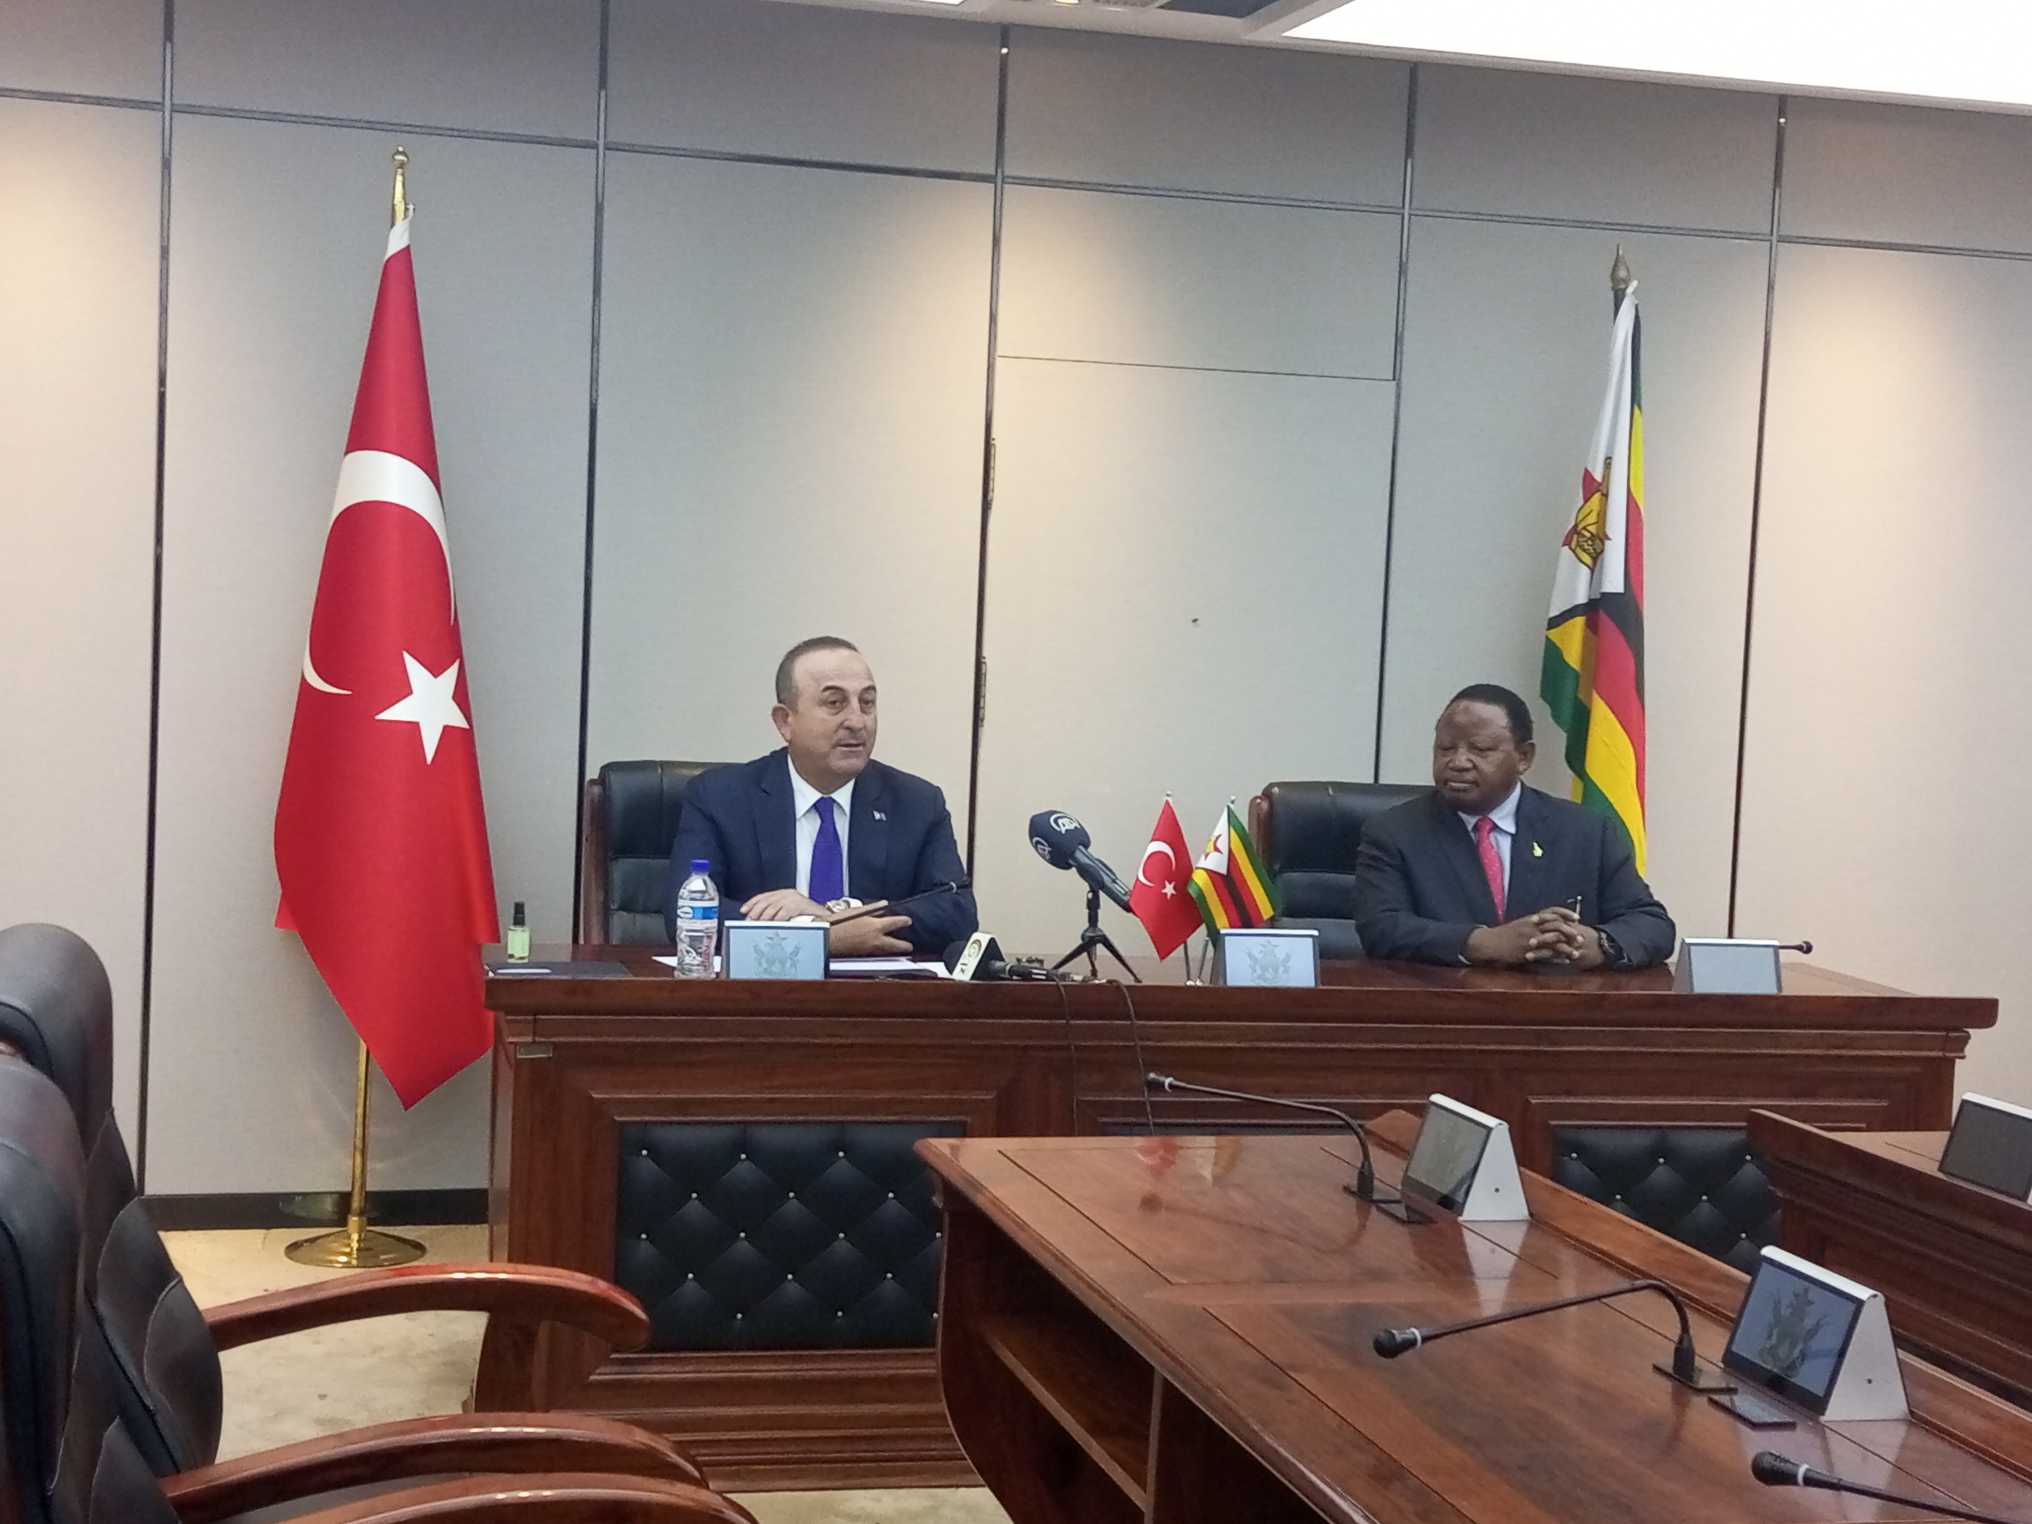 Mevlüt Cavusoglu’s visit deepens bilateral relations between Turkey and Zimbabwe